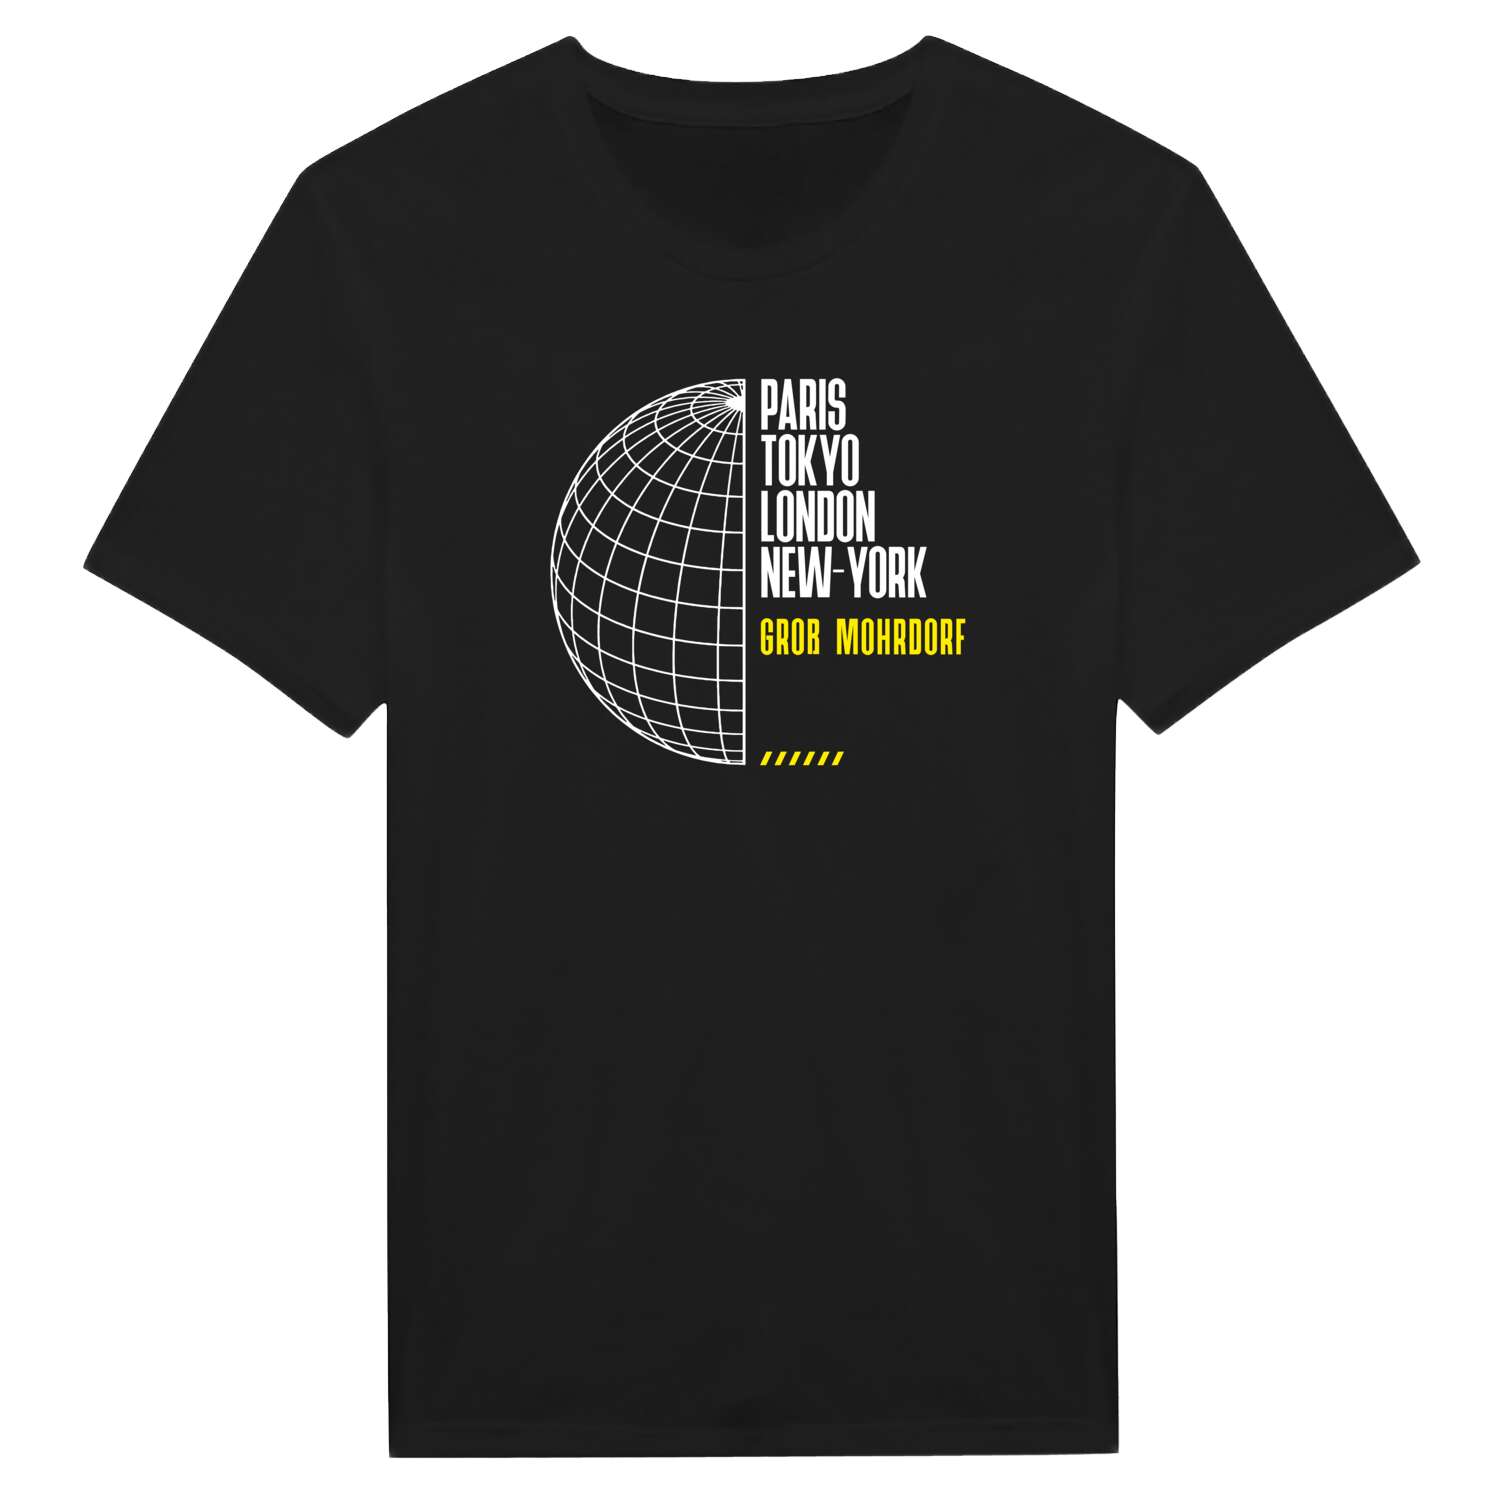 Groß Mohrdorf T-Shirt »Paris Tokyo London«